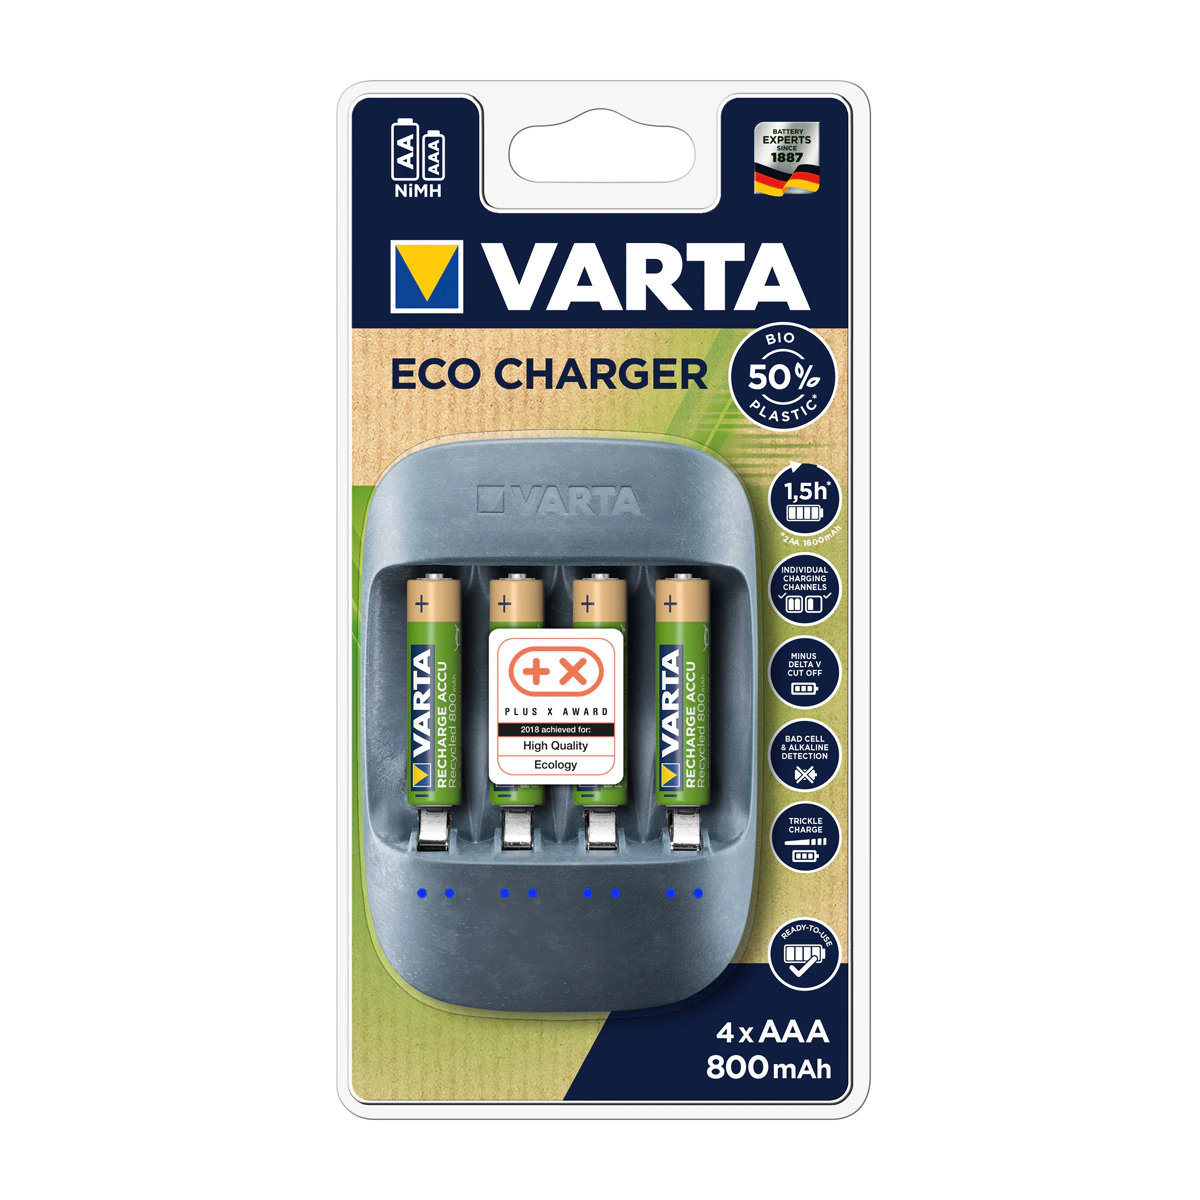 Cargador Varta Eco + 4AAA Recycled 800mAh incluidas